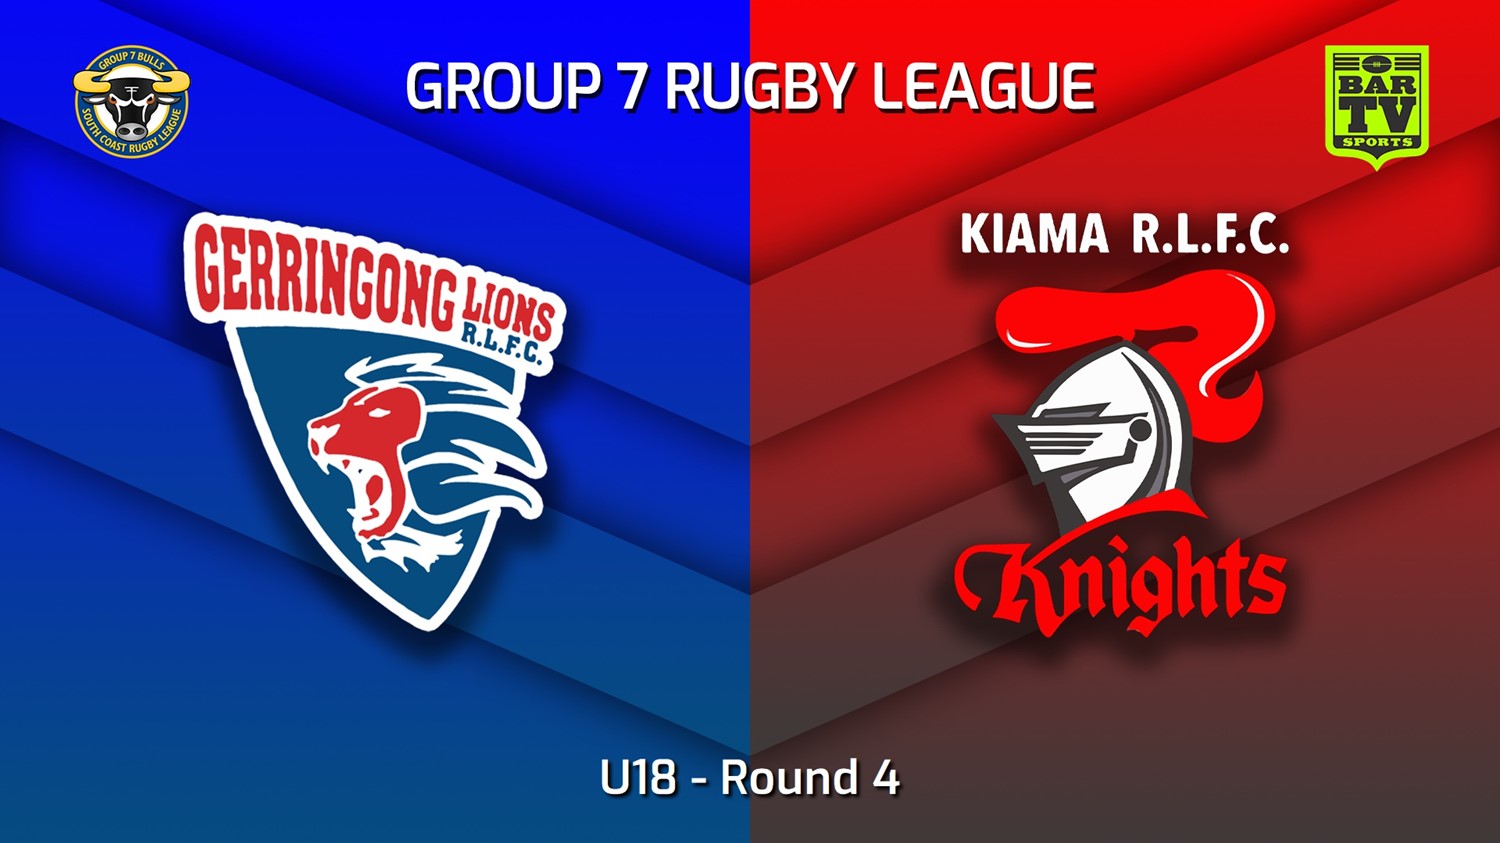 230422-South Coast Round 4 - U18 - Gerringong Lions v Kiama Knights Slate Image